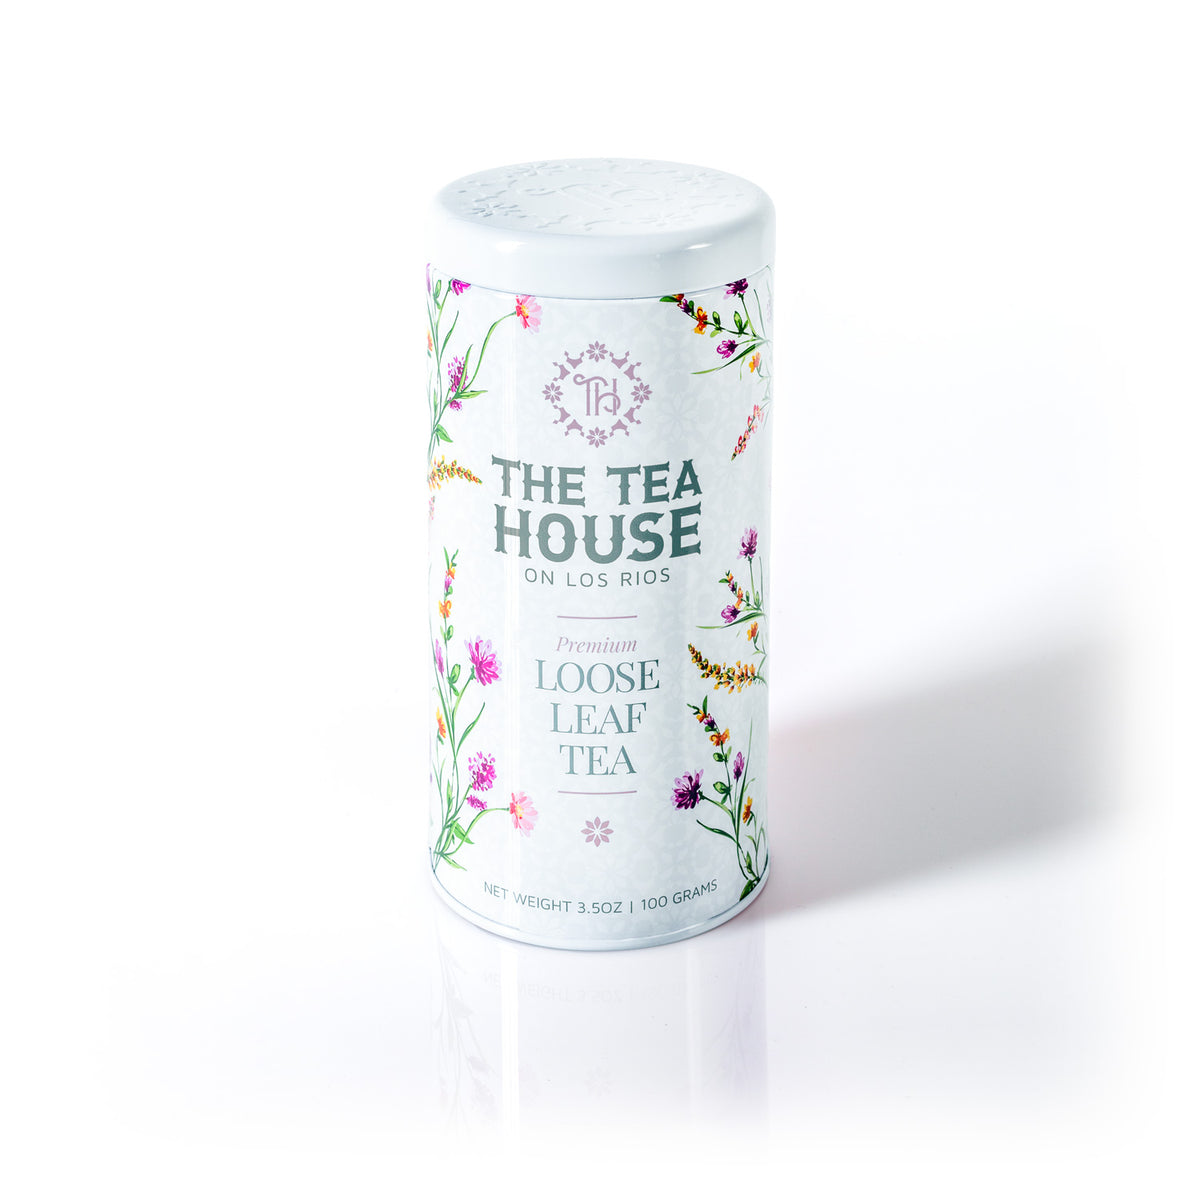 The Tea House on Los Rios releases a NEW 100g Loose Leaf Tea Tin